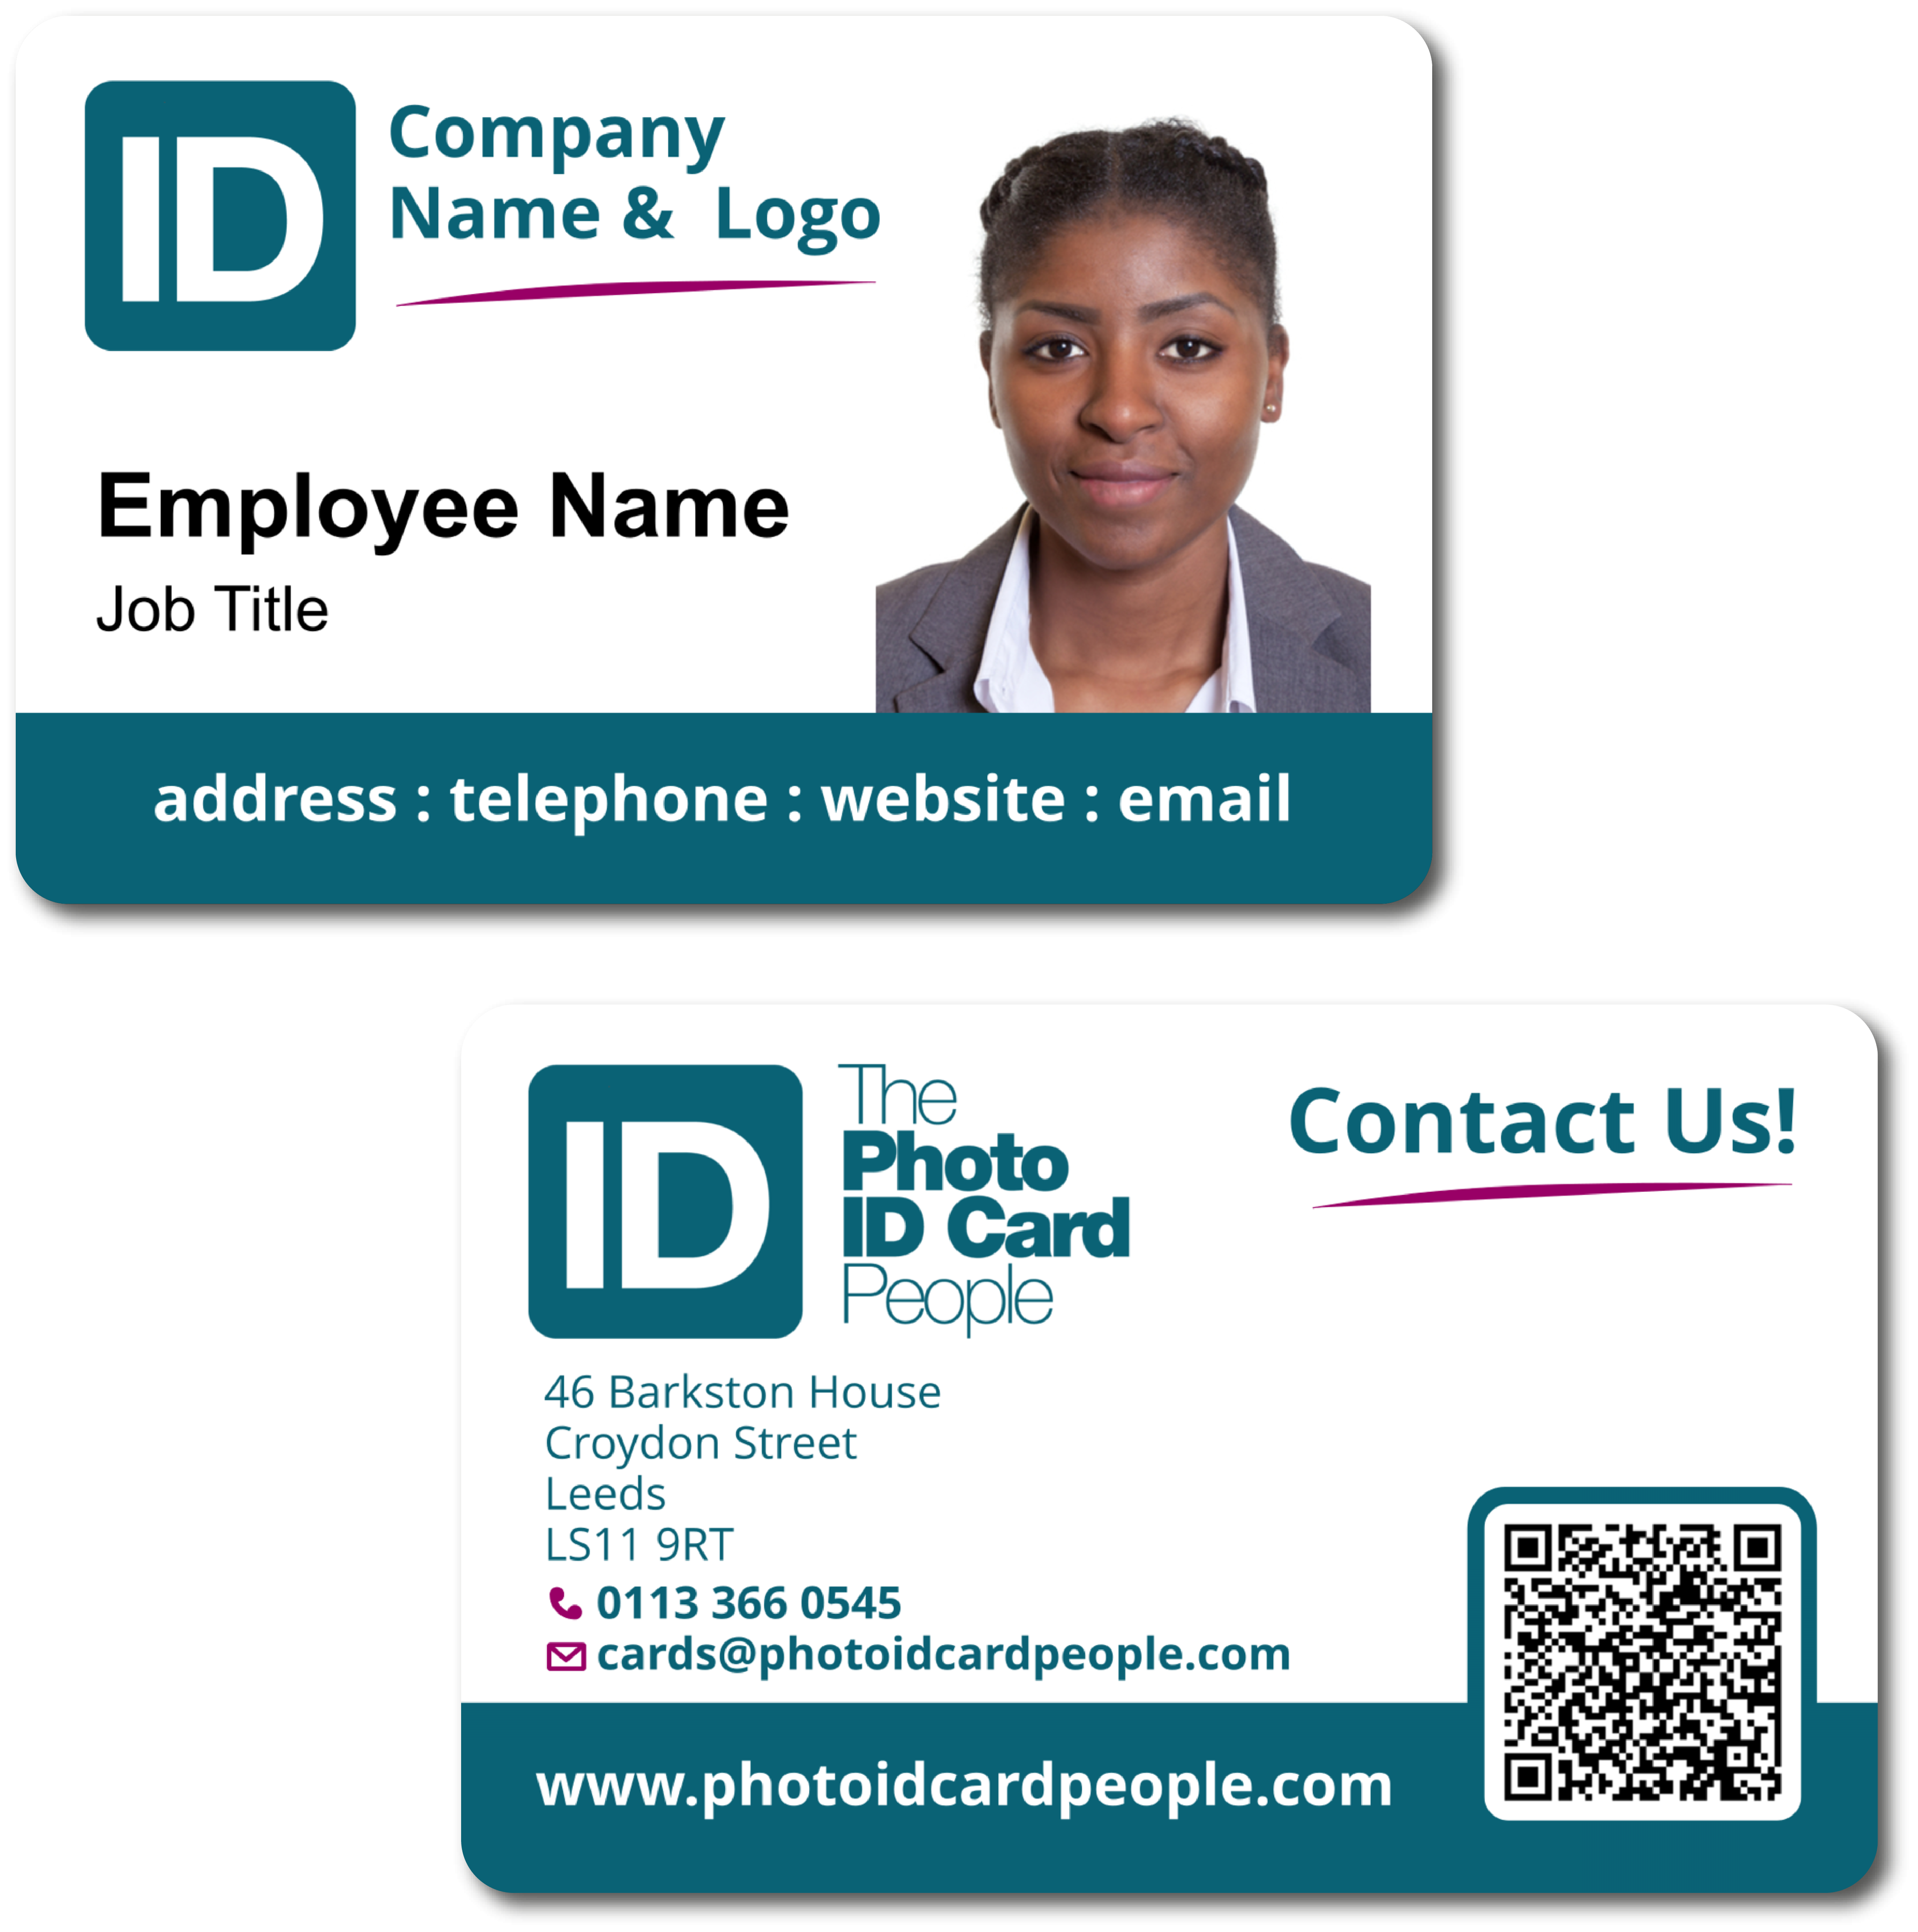 ID Card Maker: Create a Custom ID Card Online for Free